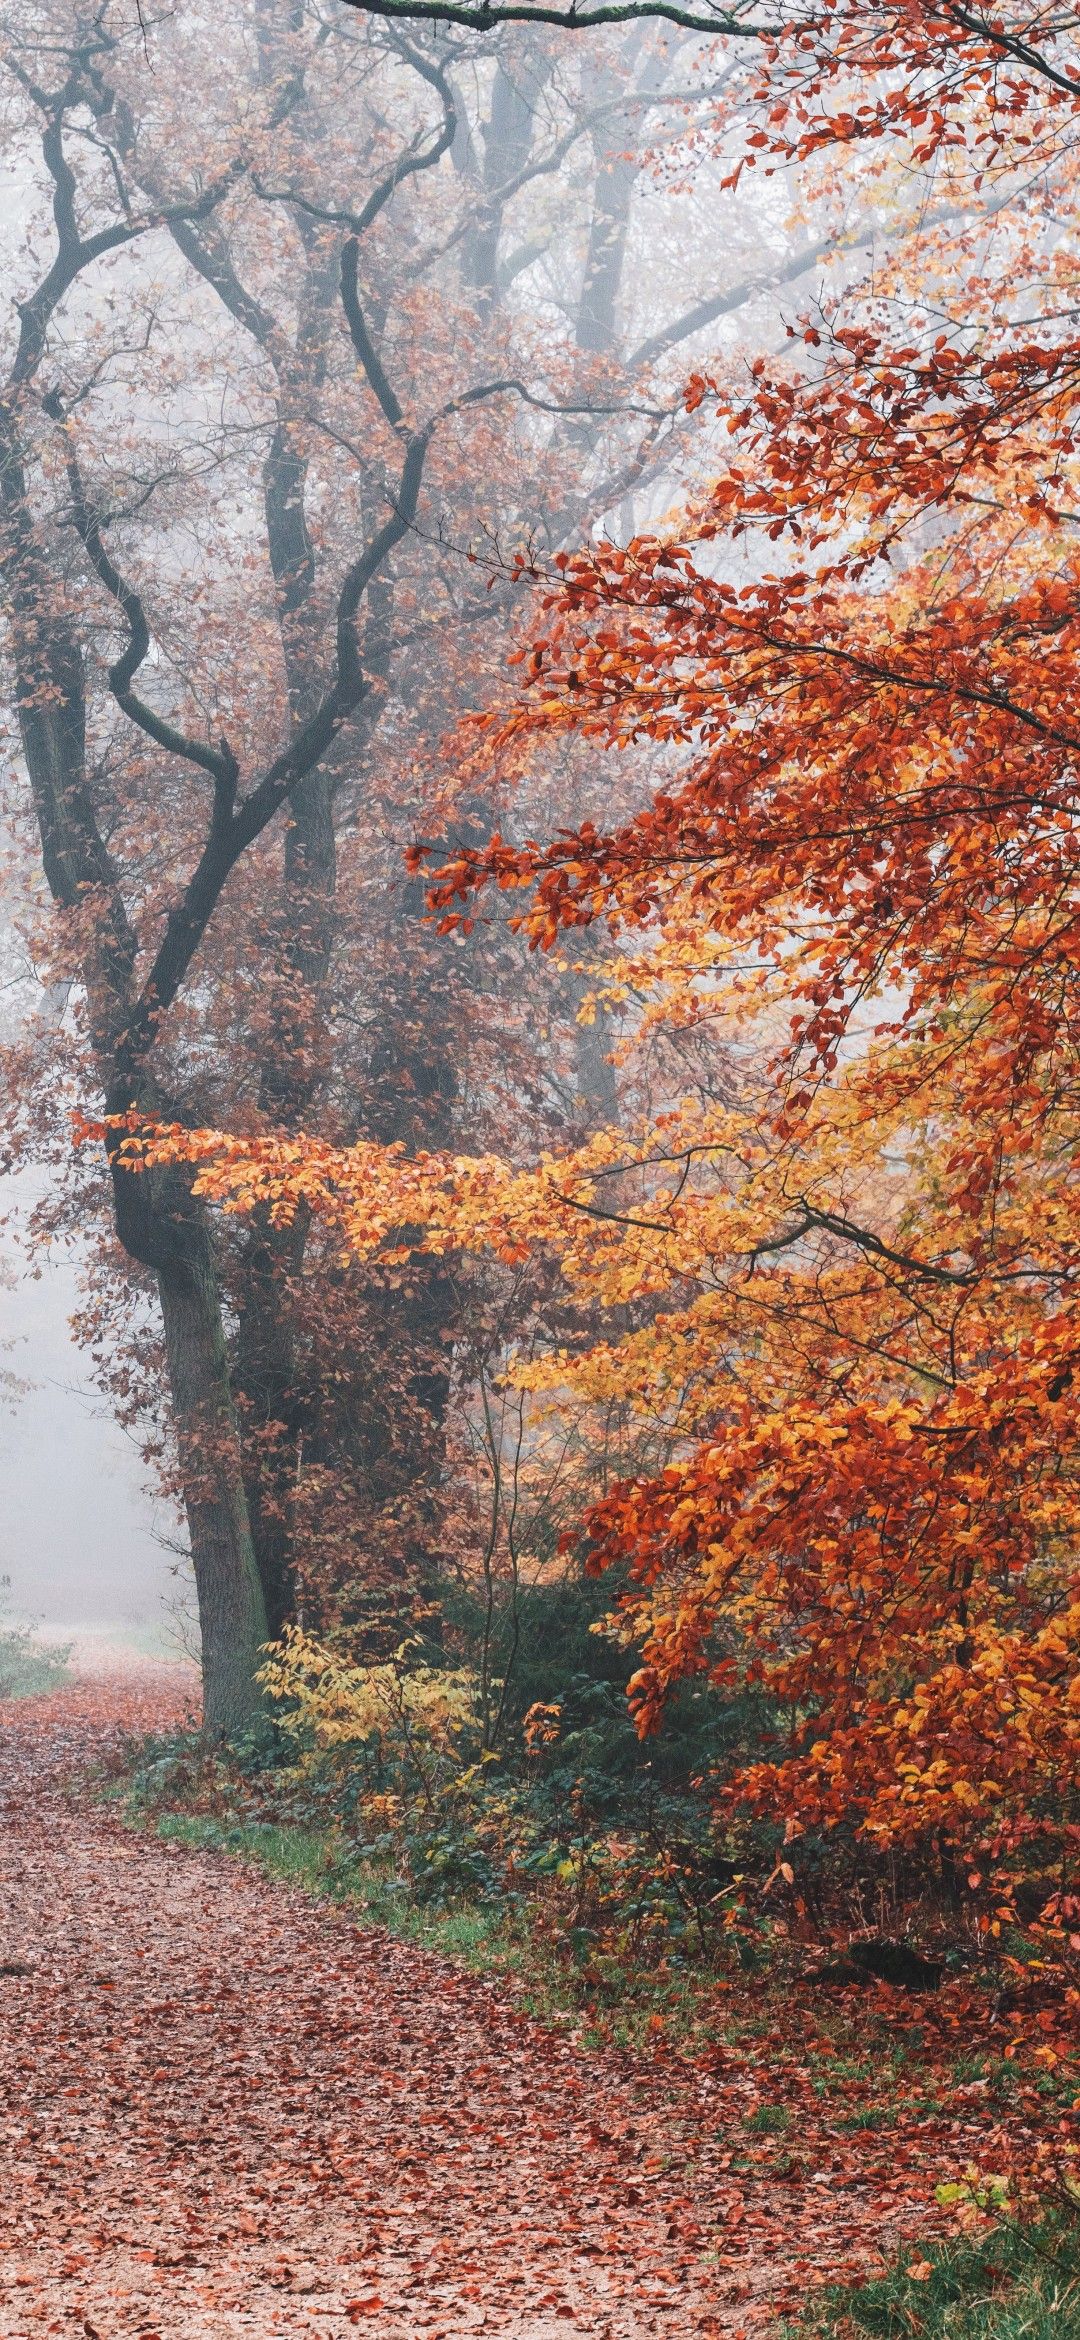 Autumn 4K Wallpaper, Forest, Fall Foliage, Trees, Foggy, Morning, 5K, 8K, Nature